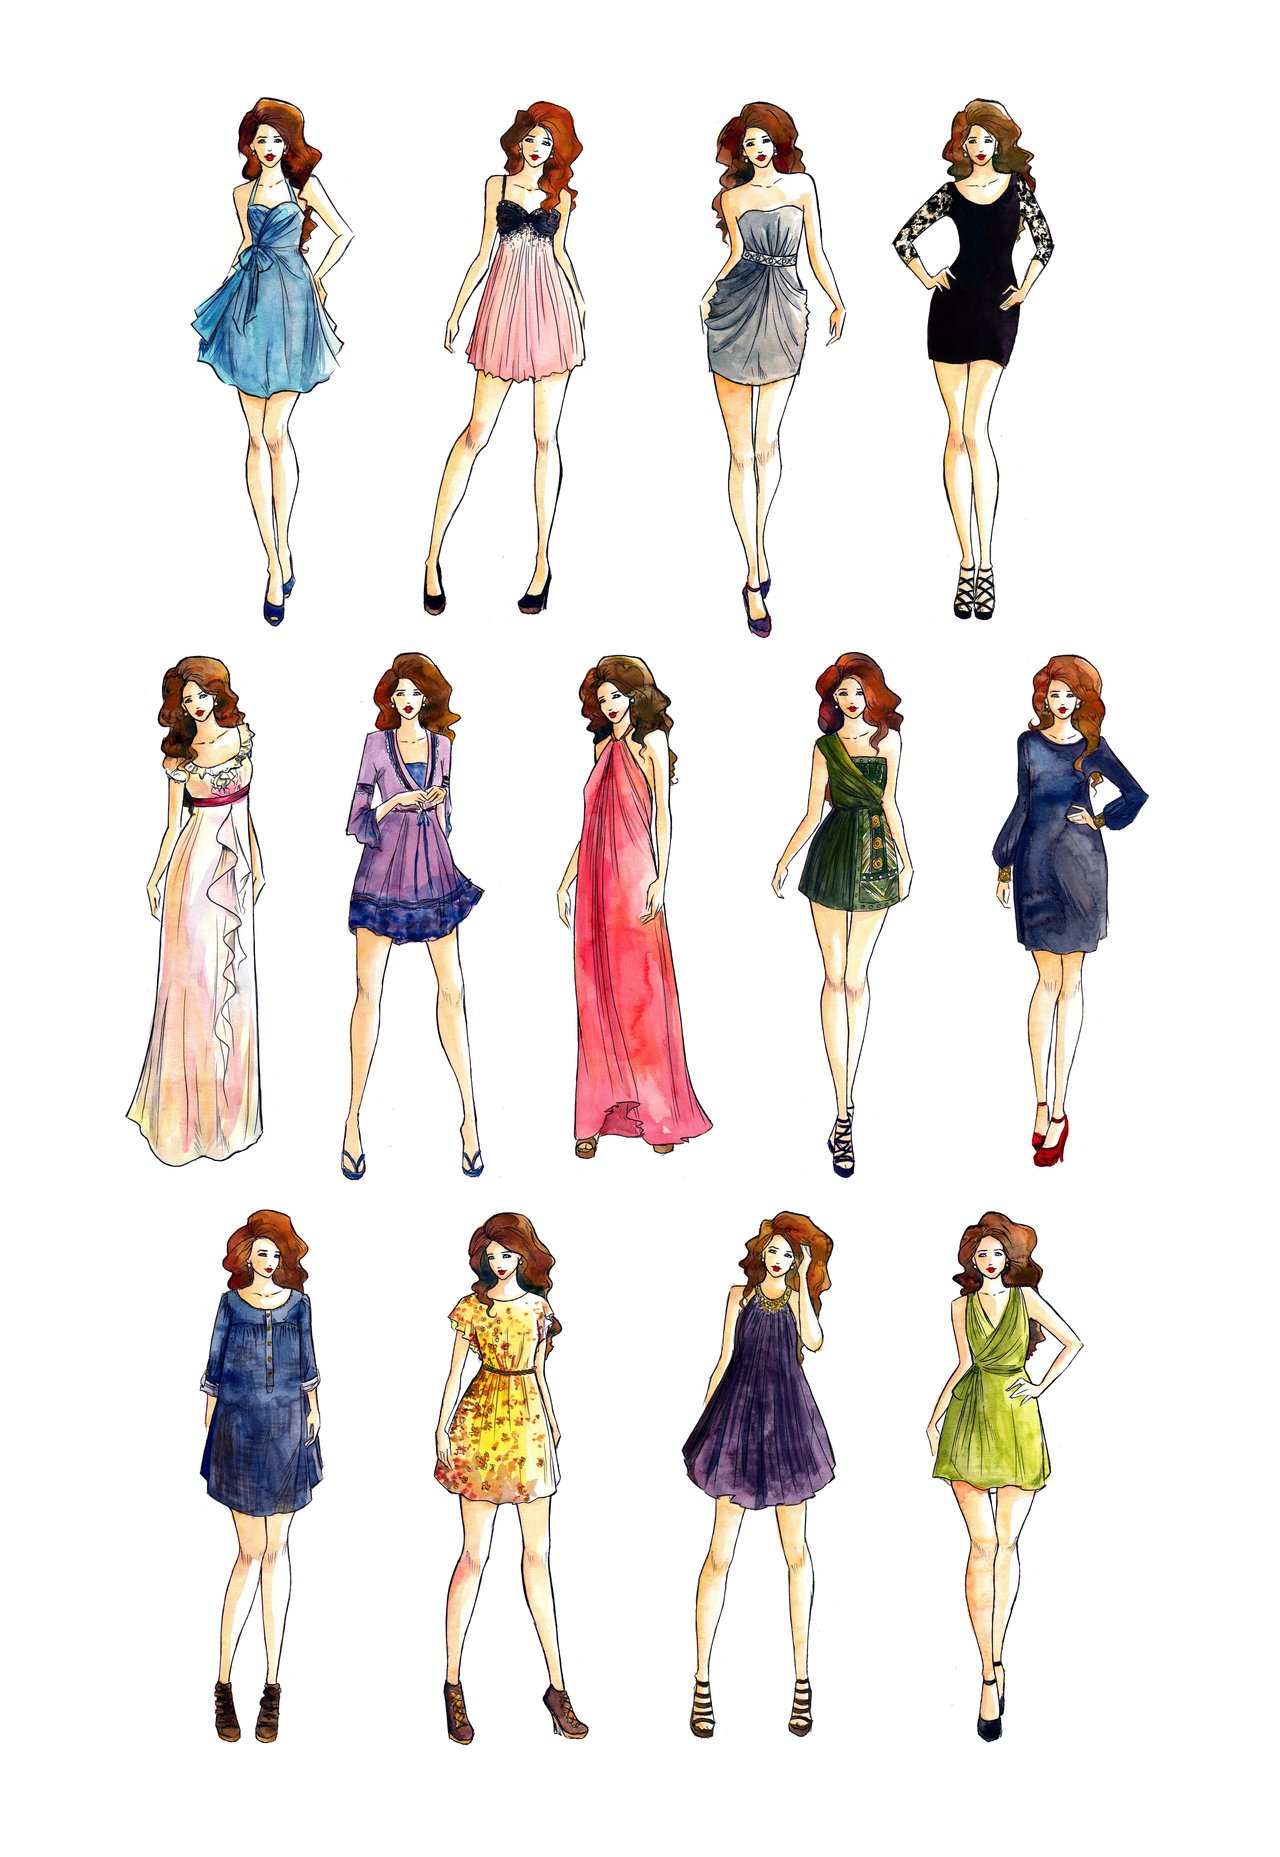 DeviantArt: More Like Dress styles fashion illustration by LouSasa